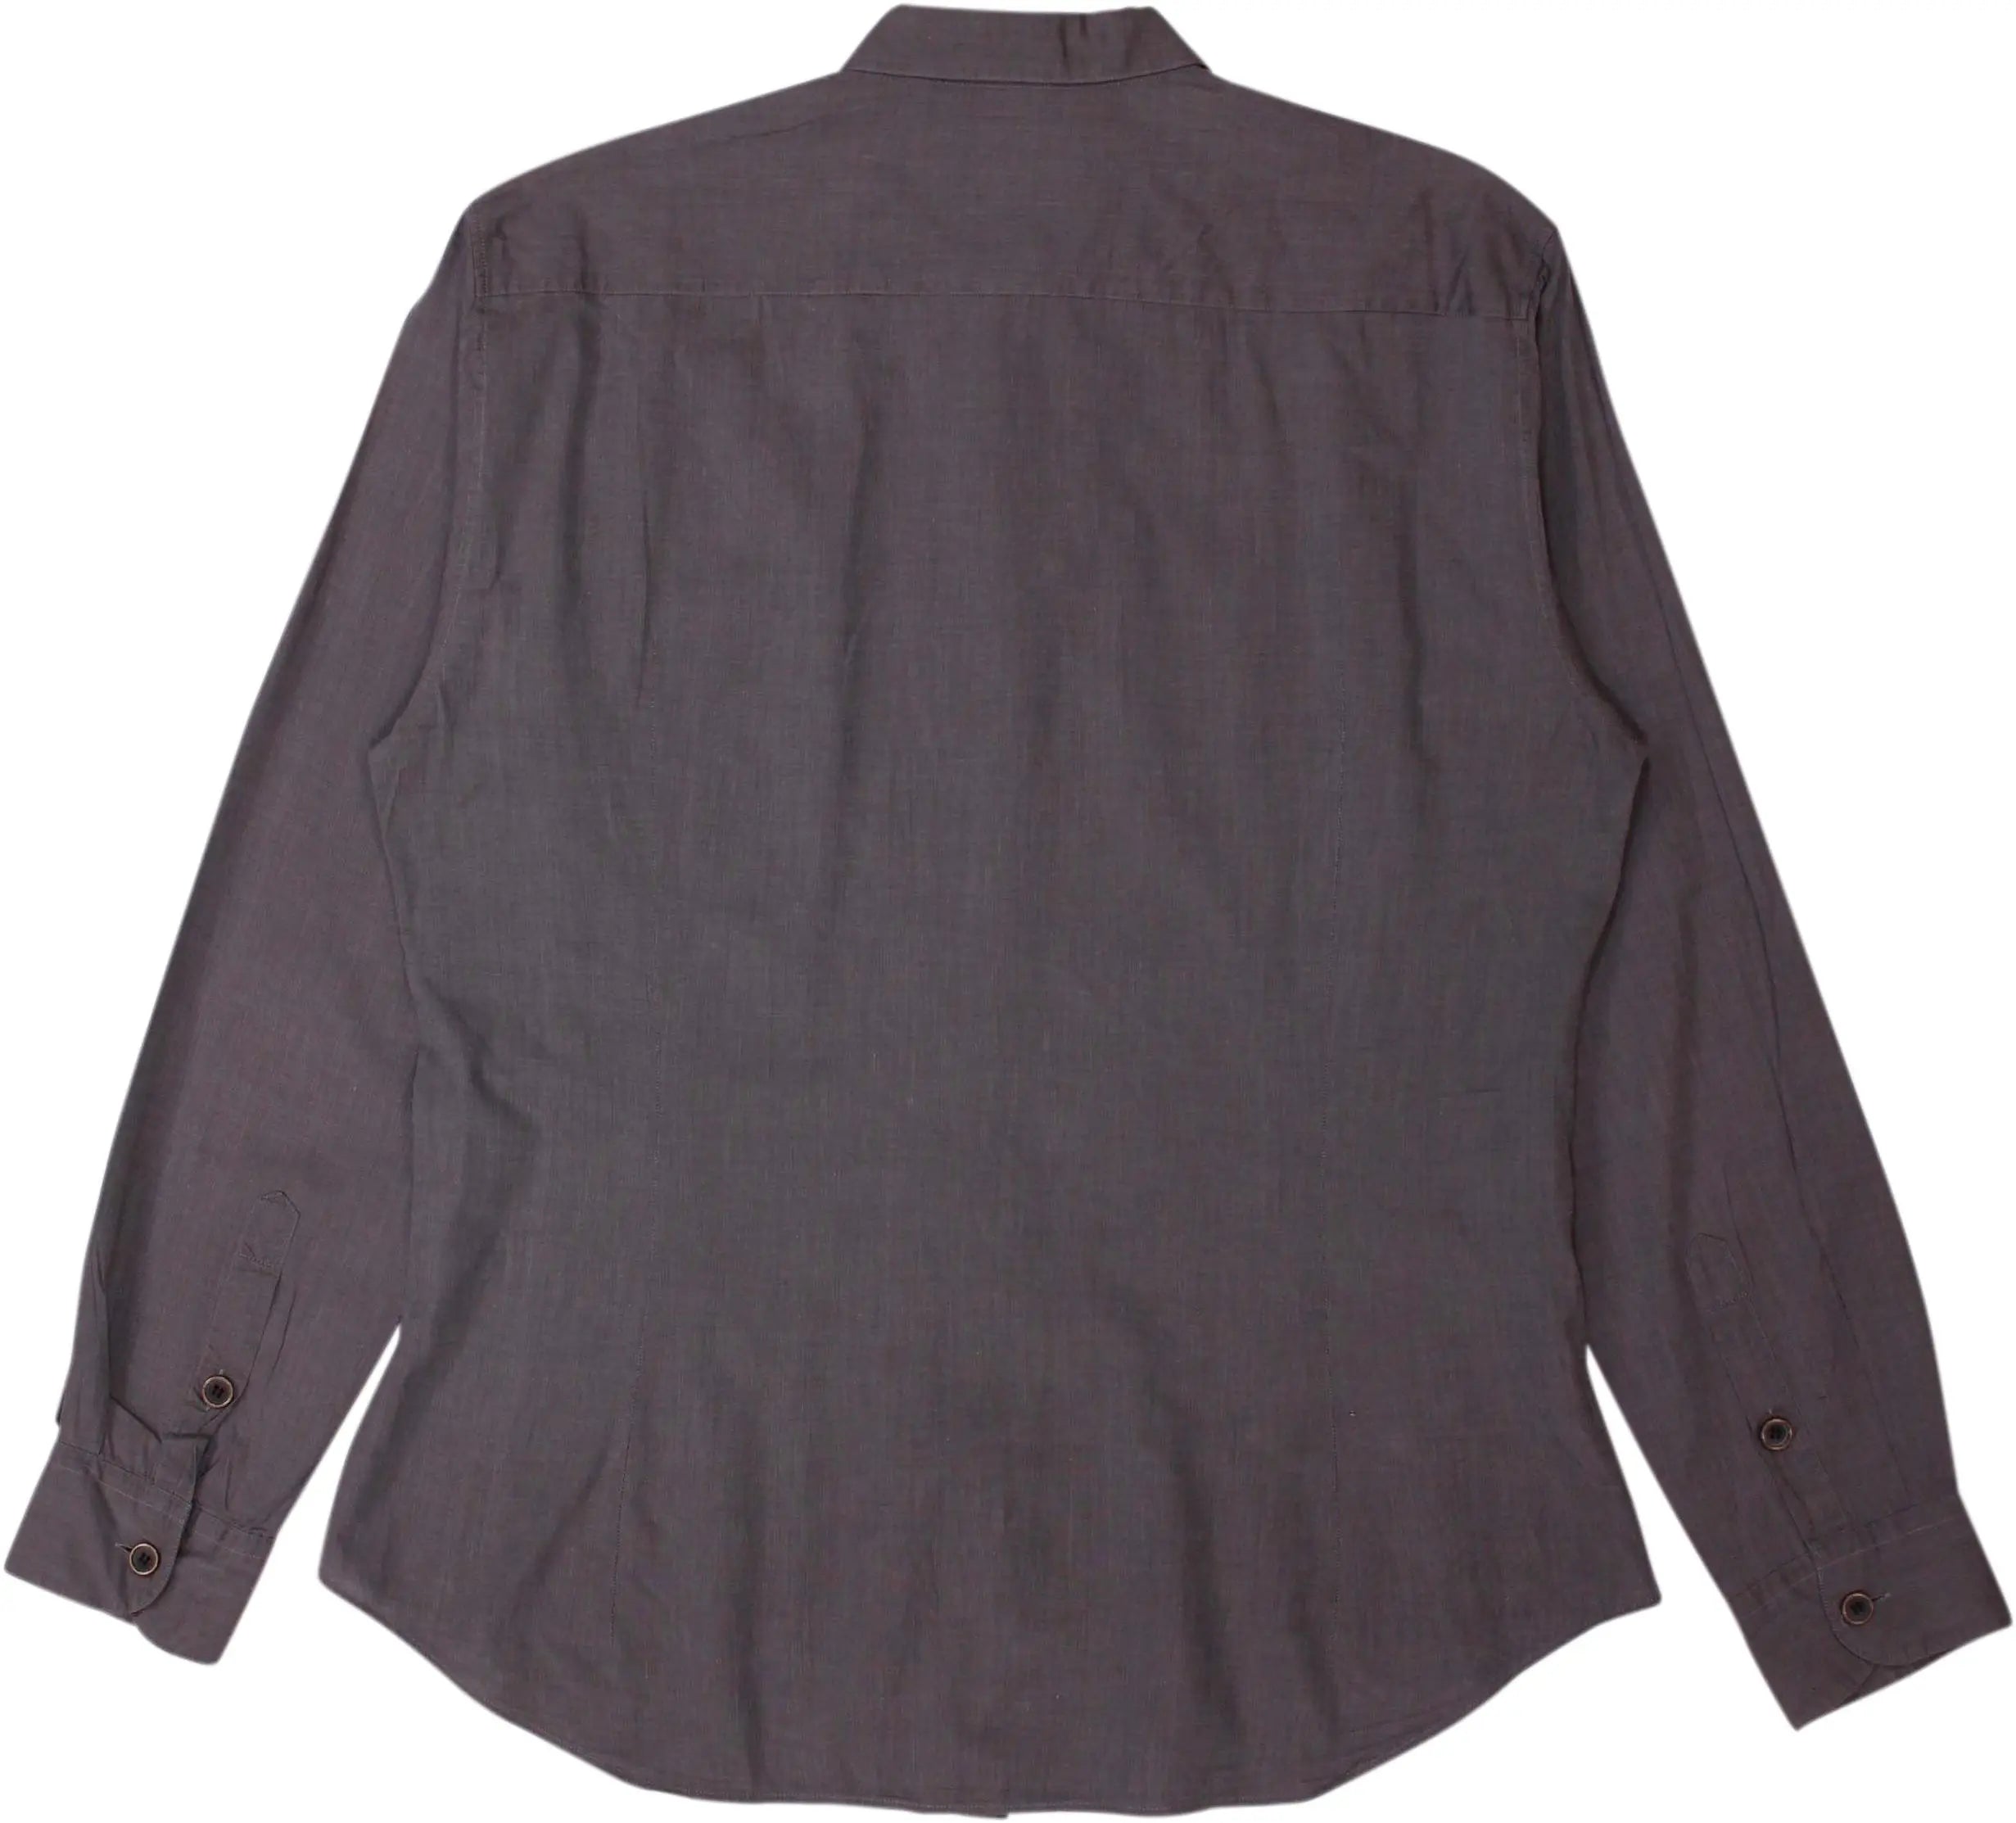 Giorgio Armani - Grey Long Sleeve Shirt by Giorgio Armani- ThriftTale.com - Vintage and second handclothing